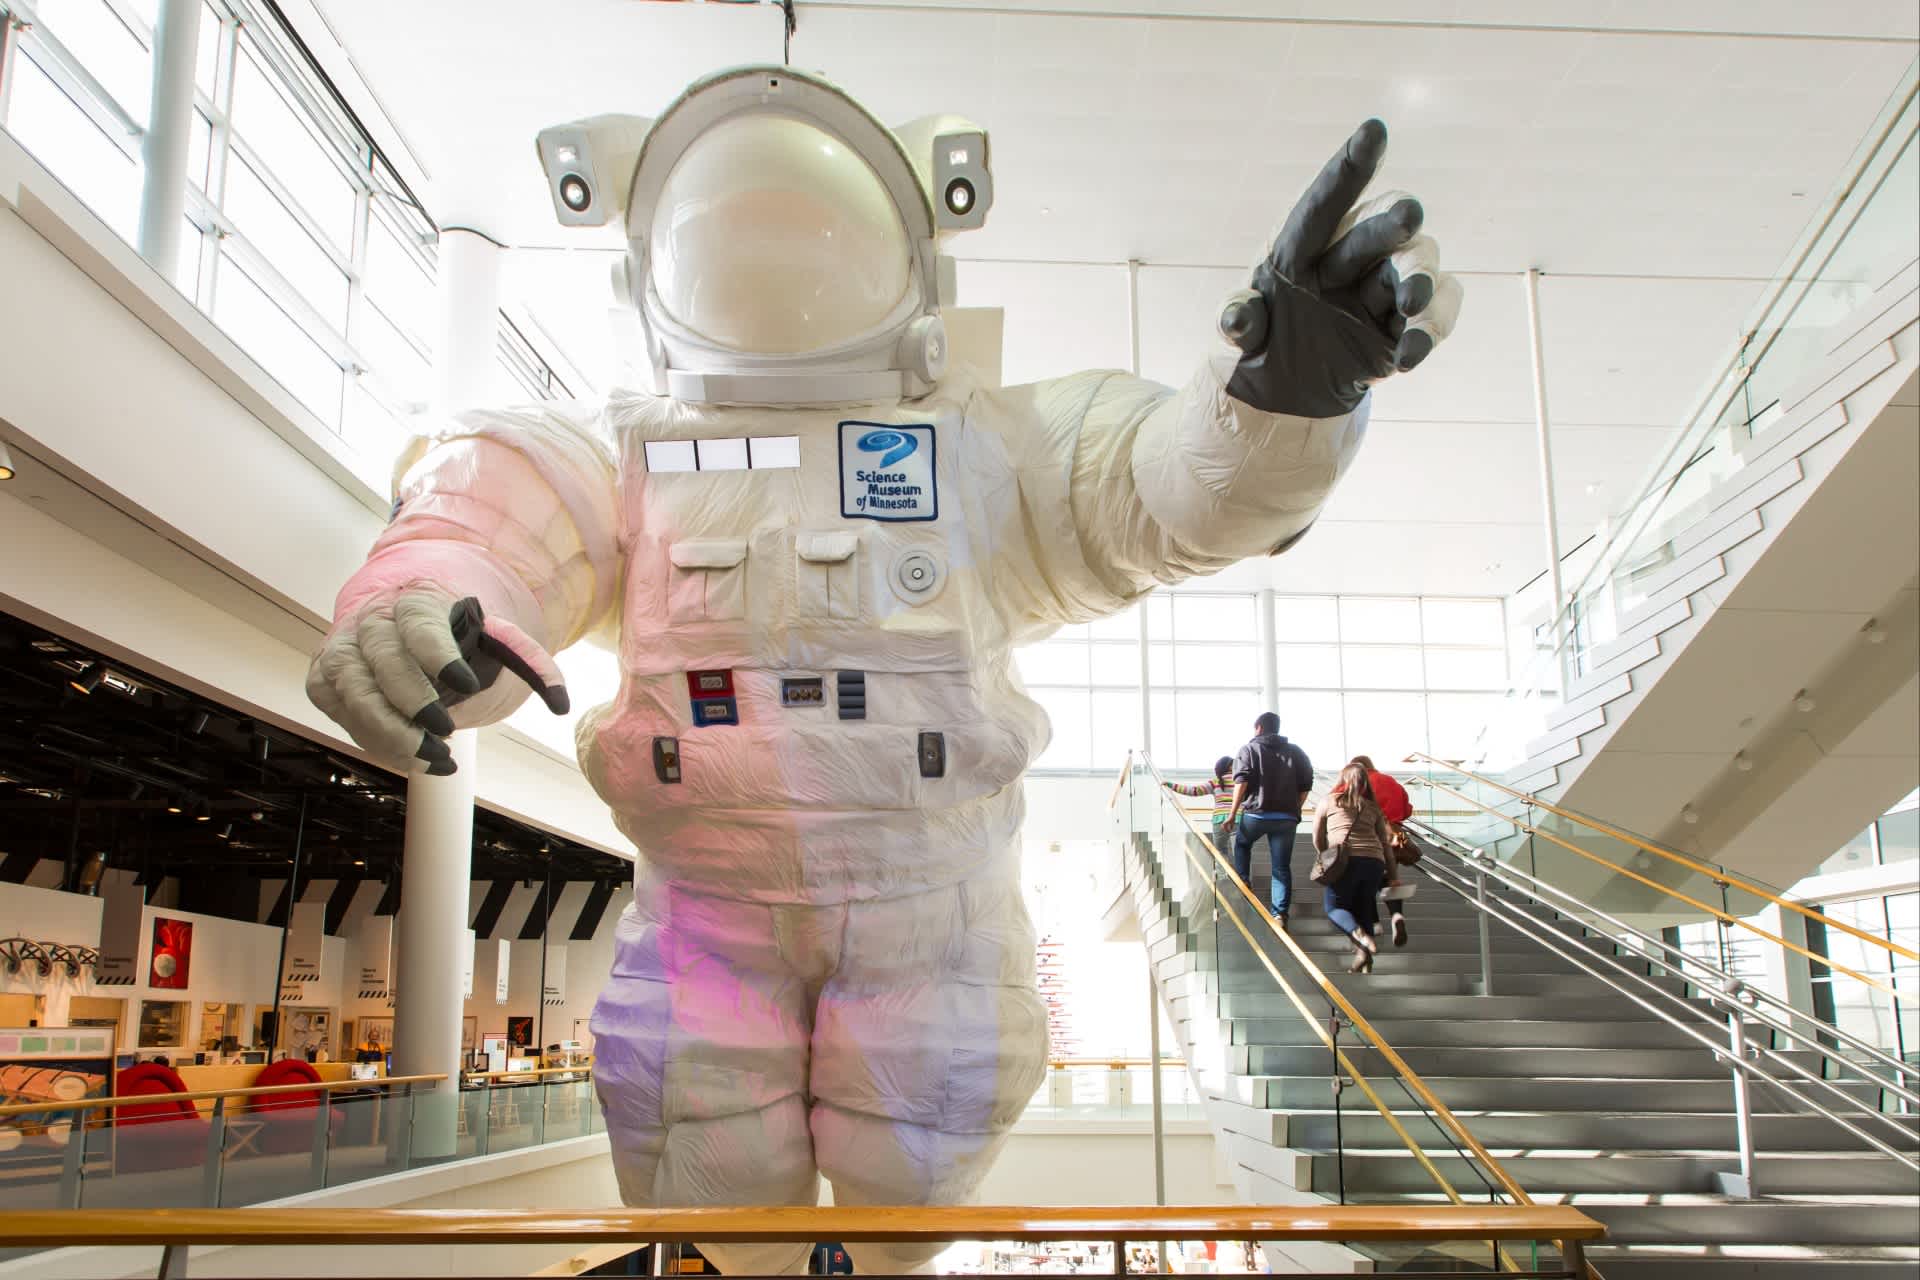 A photo of the Giant Astronaut exhibit.